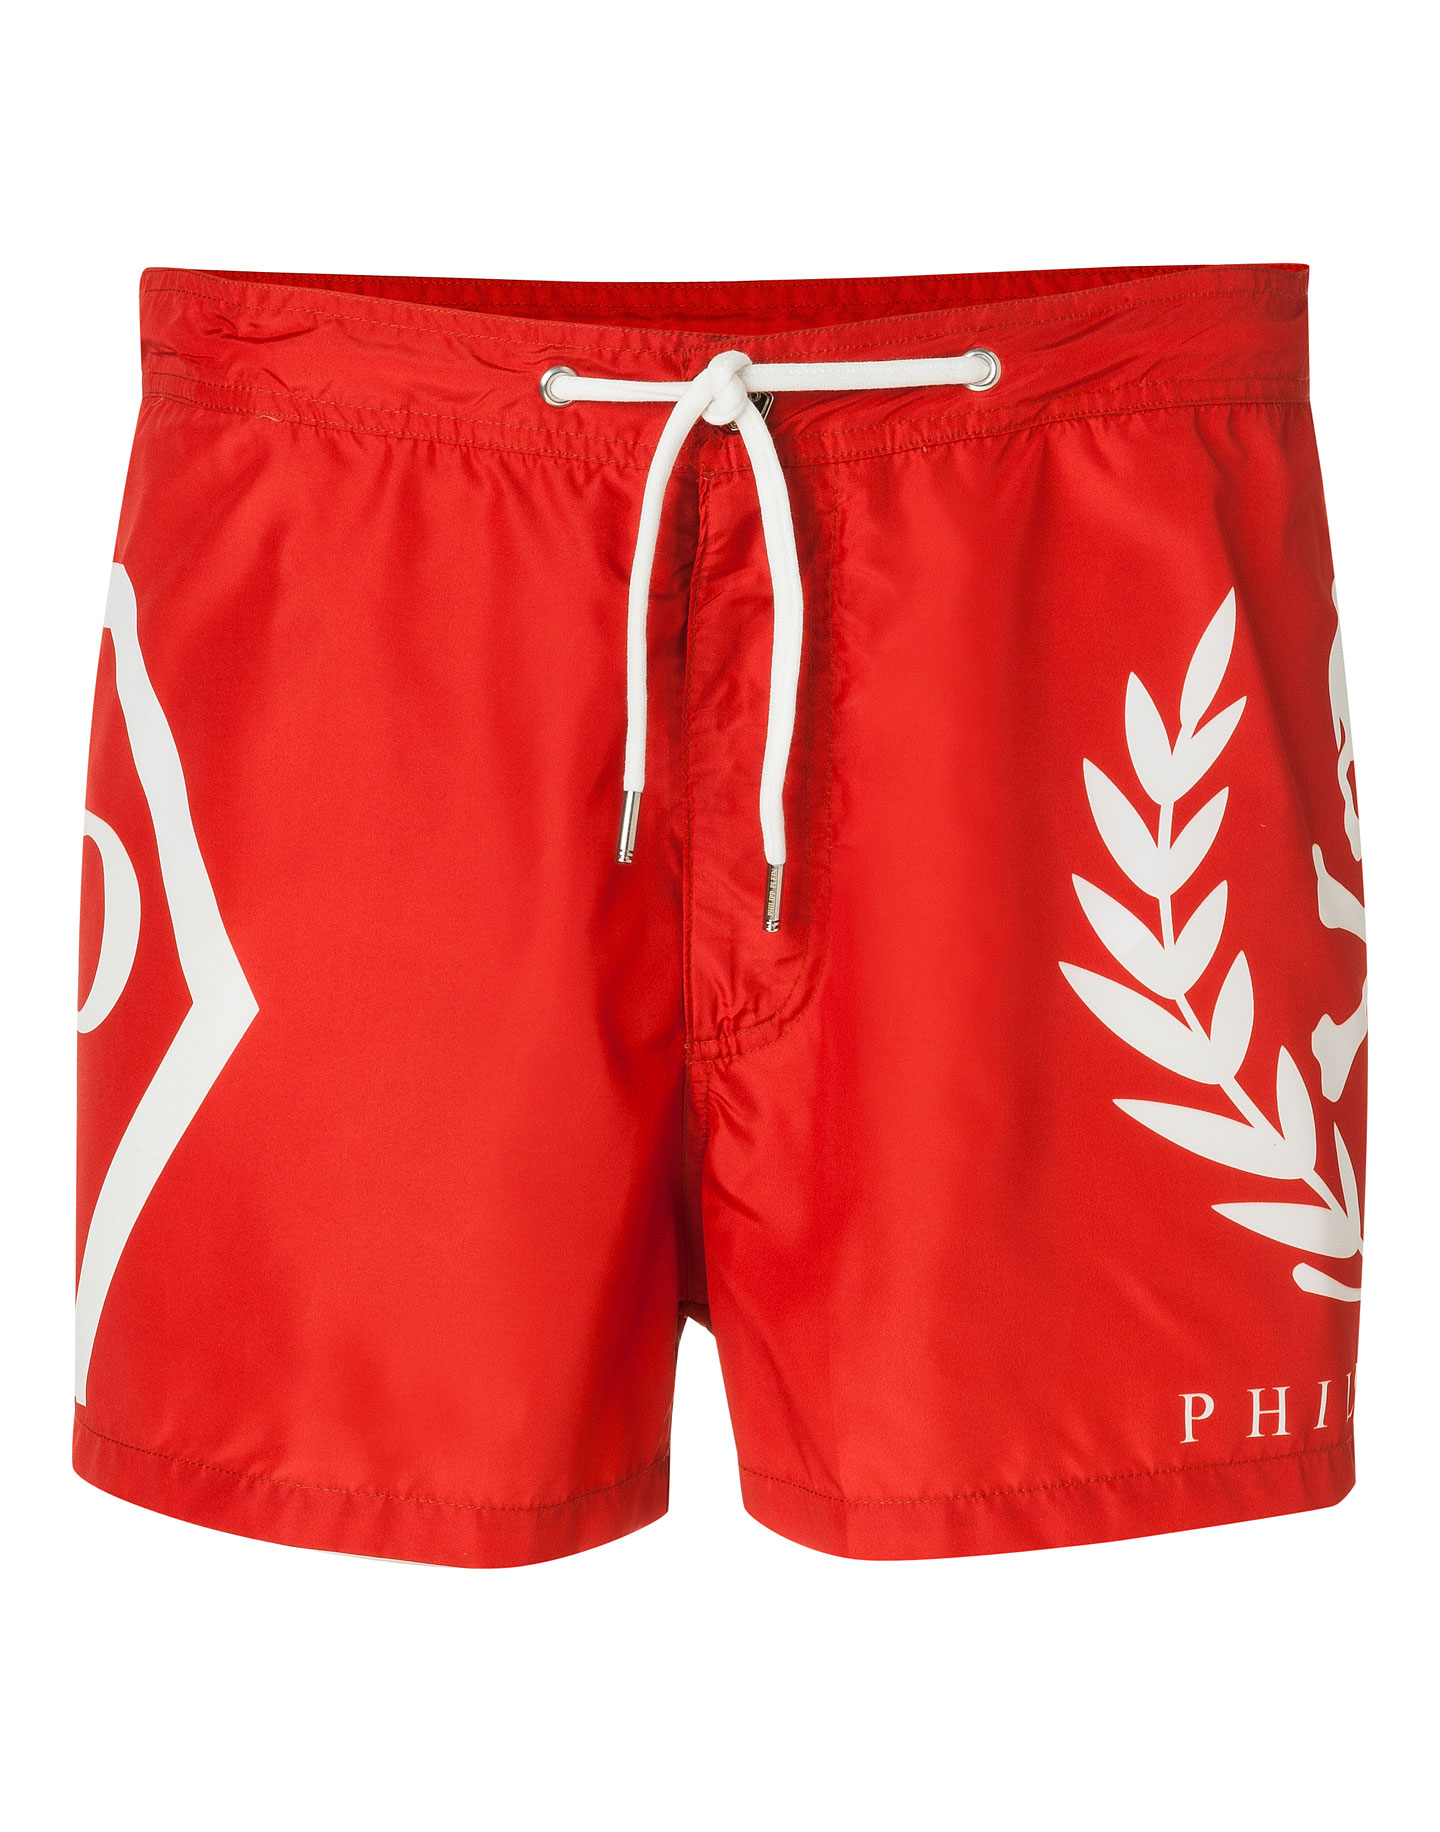 philipp plein swimming shorts